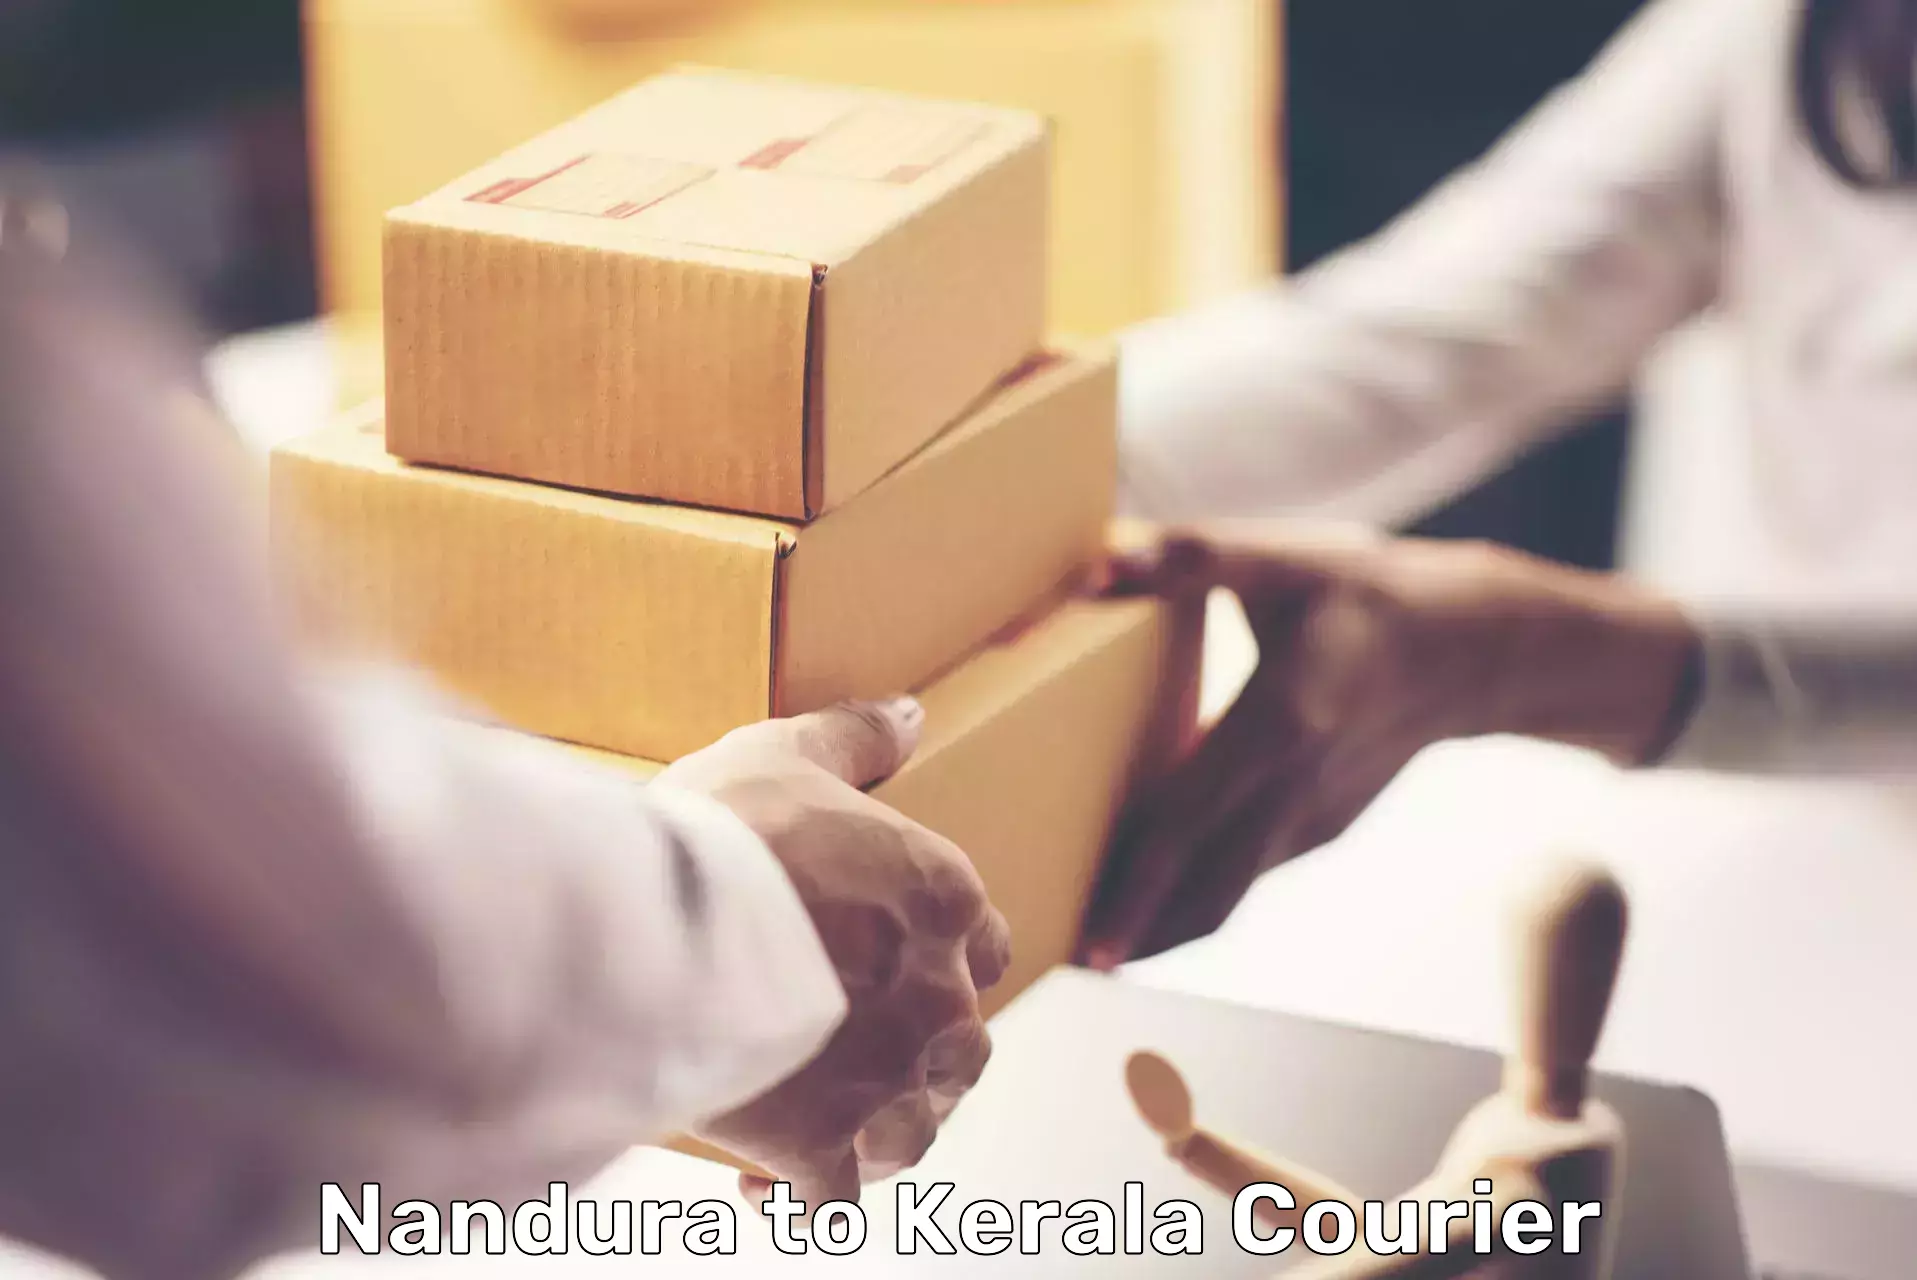 Express delivery capabilities Nandura to Ponekkara